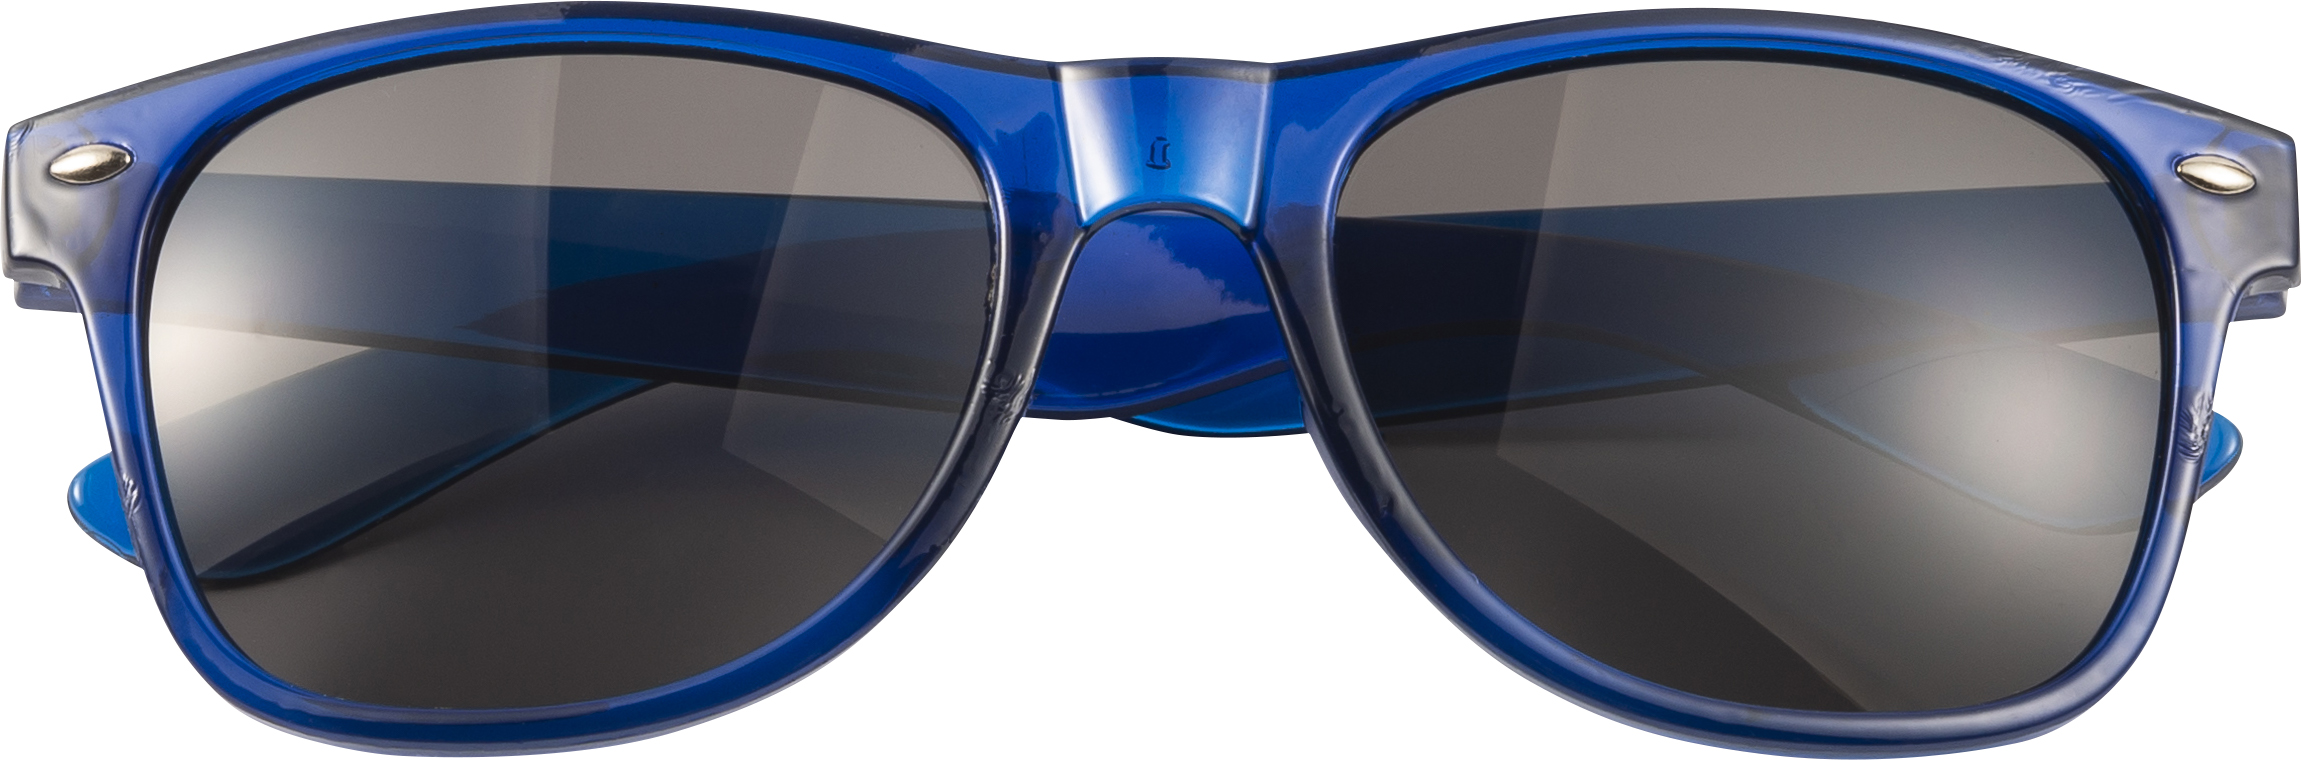 Custom Printed Wedding Sunglasses | Wedding sunglasses, Party sunglasses, Custom  sunglasses